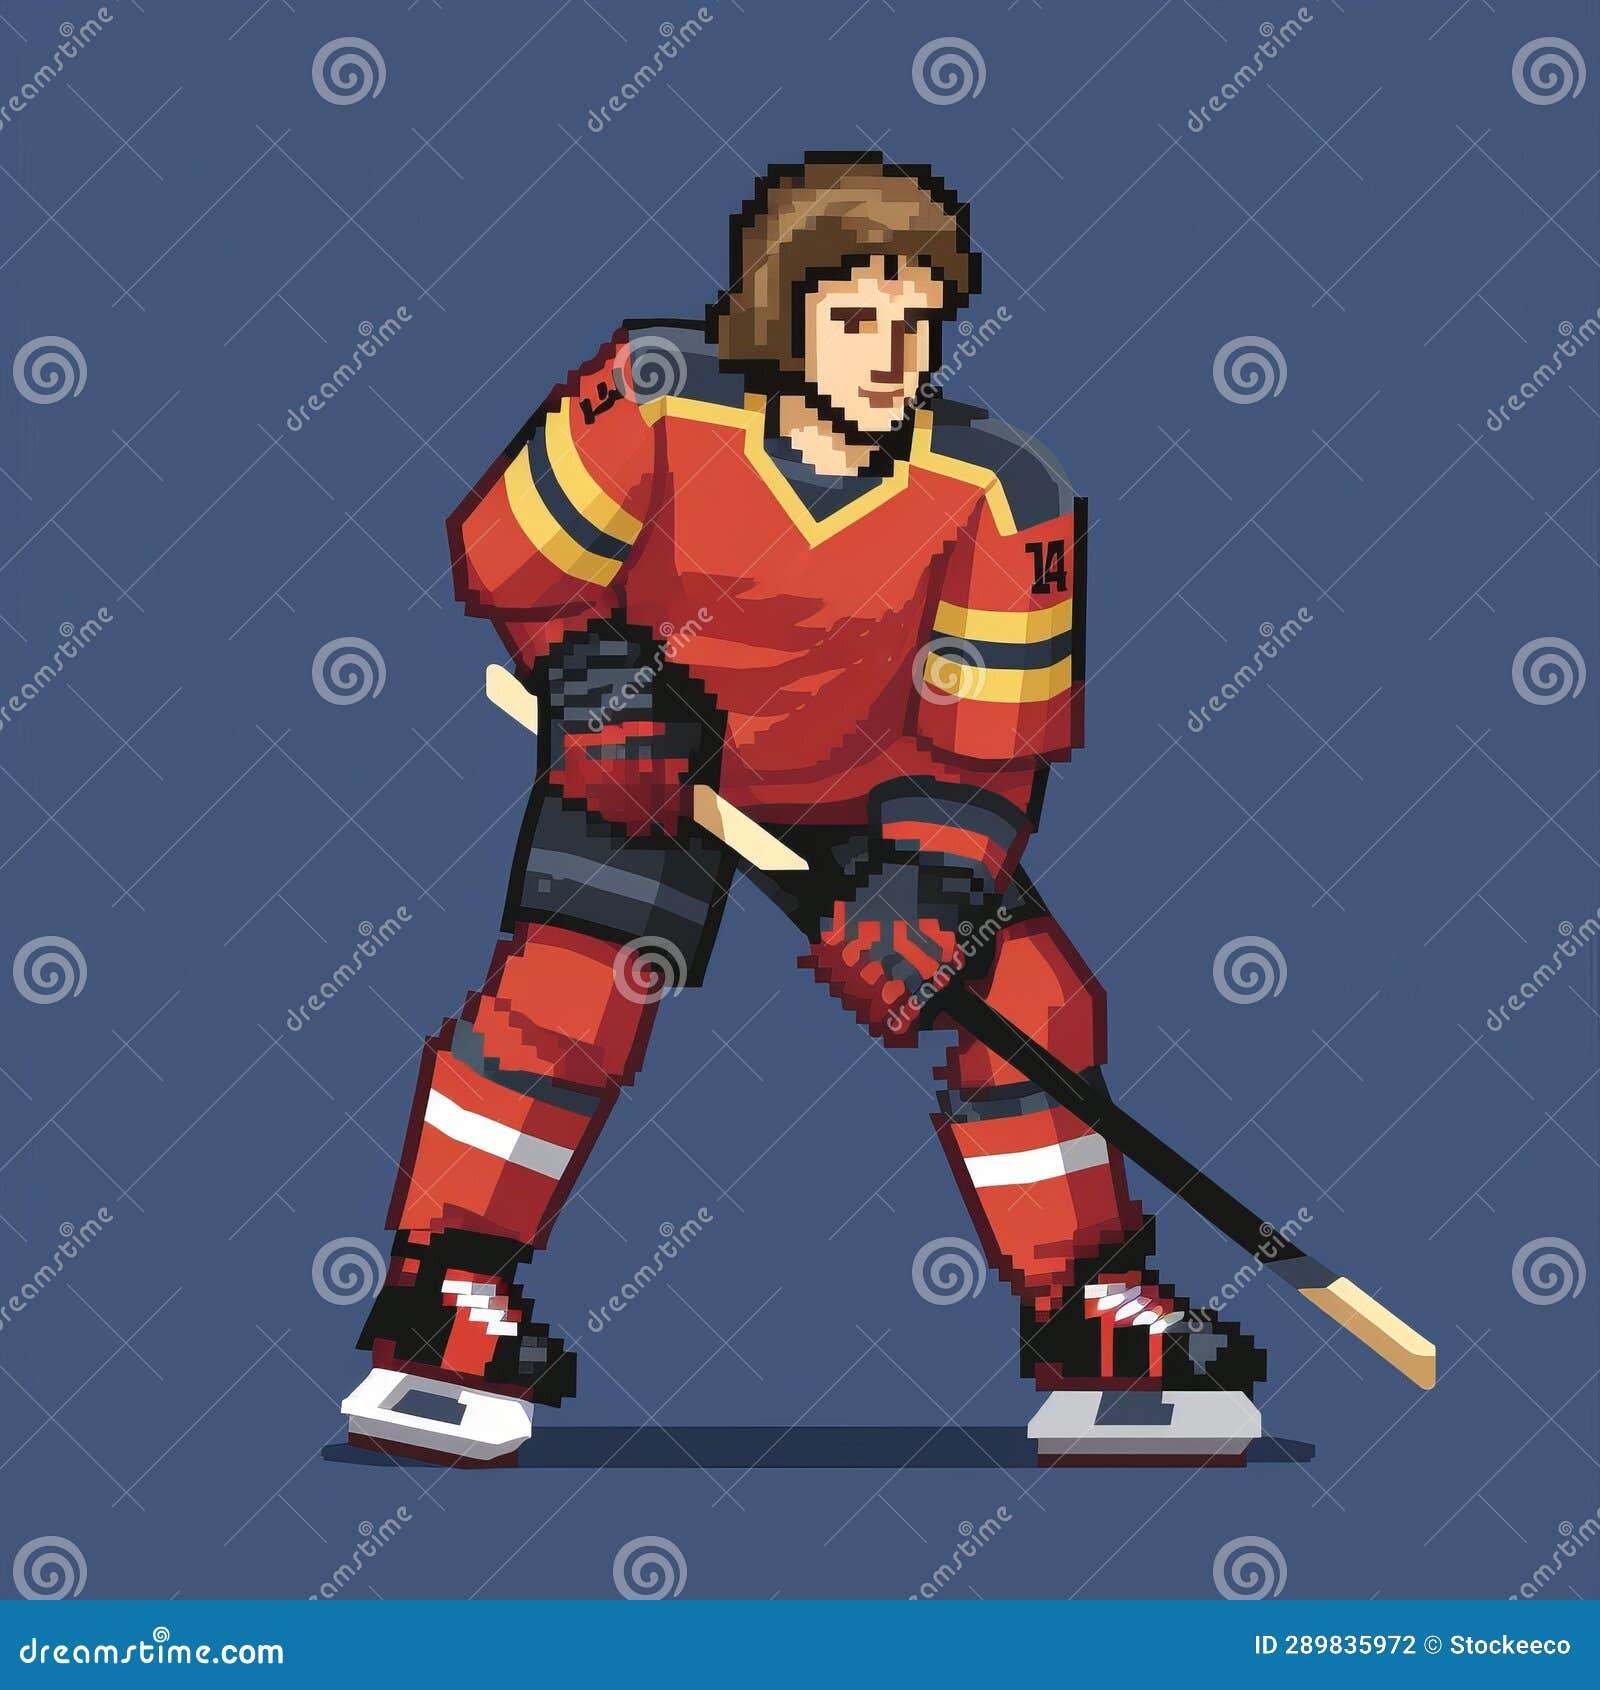 pixel hockey player: alasdair mclellan style sports art